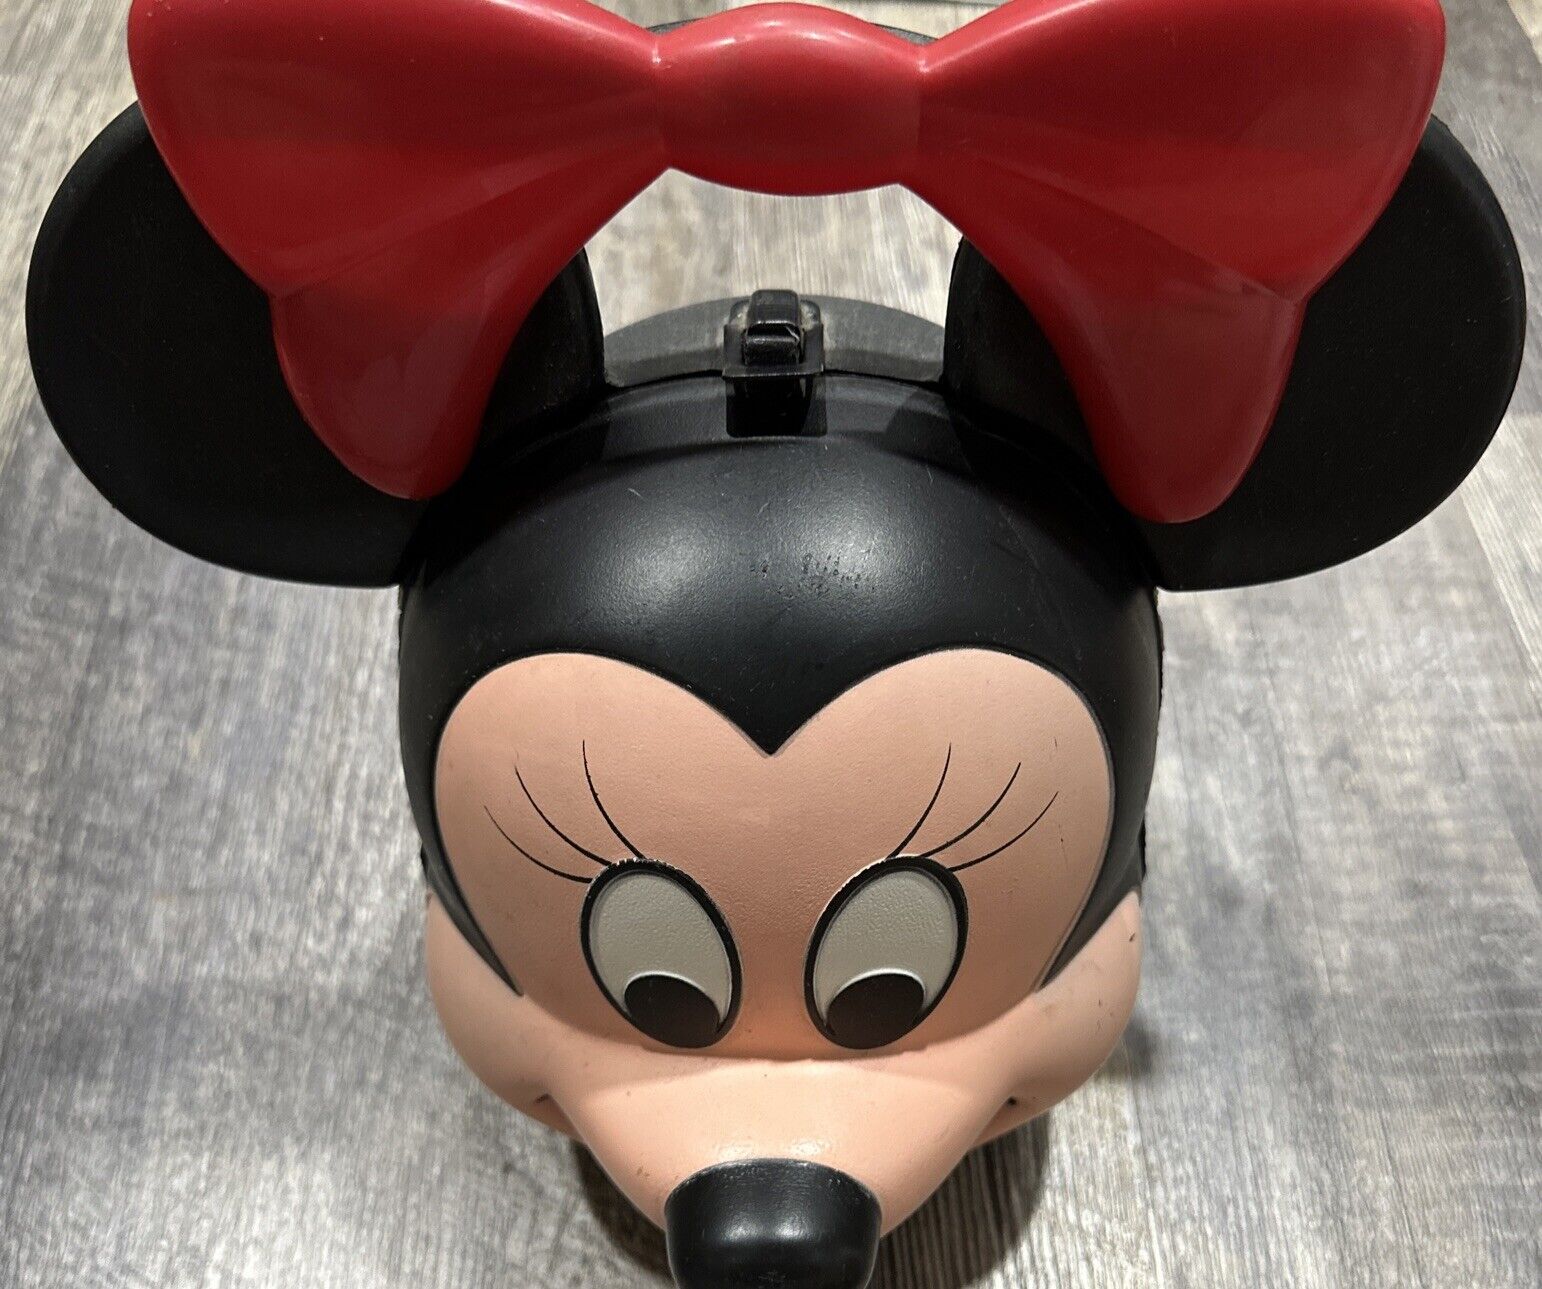 Vintage Walt Disney Minnie Mouse Head Plastic Lunch Box by Aladdin NO Thermos